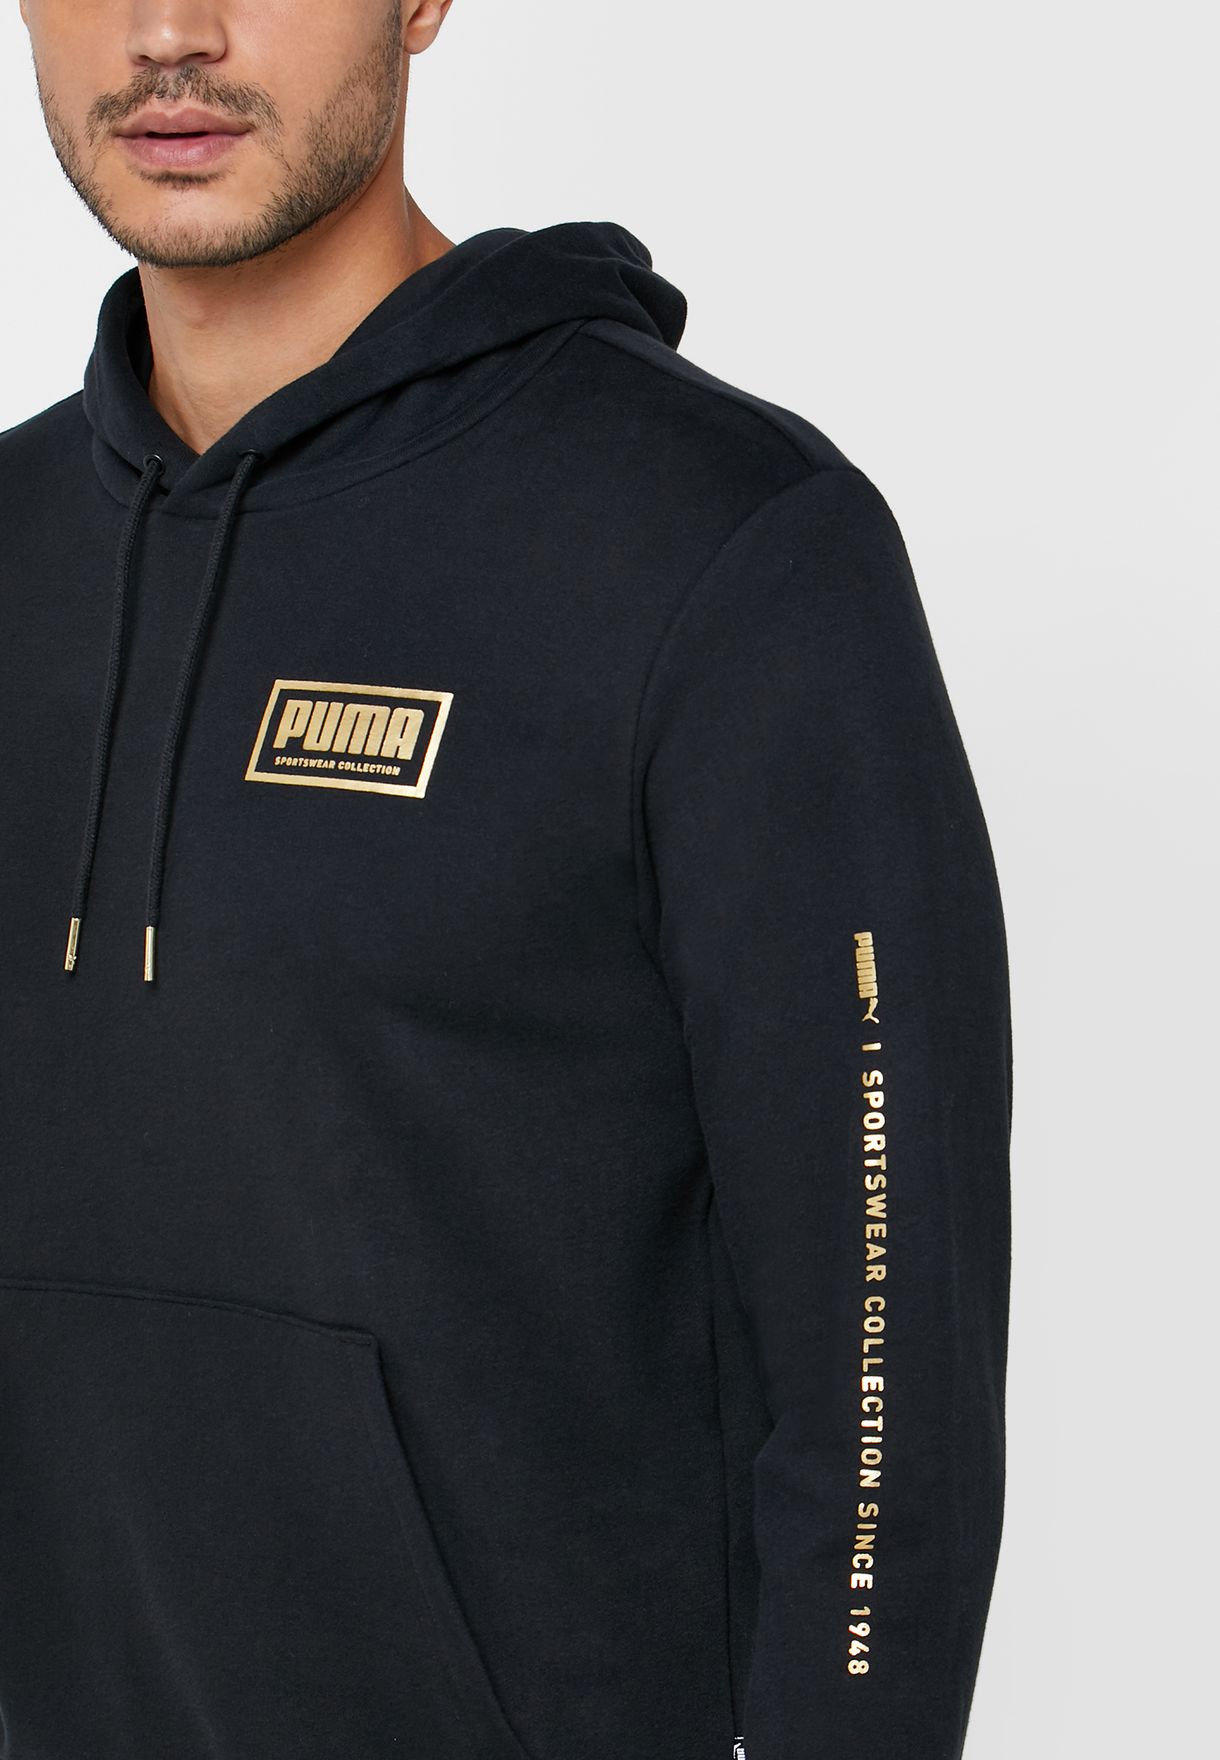 puma since 1948 hoodie